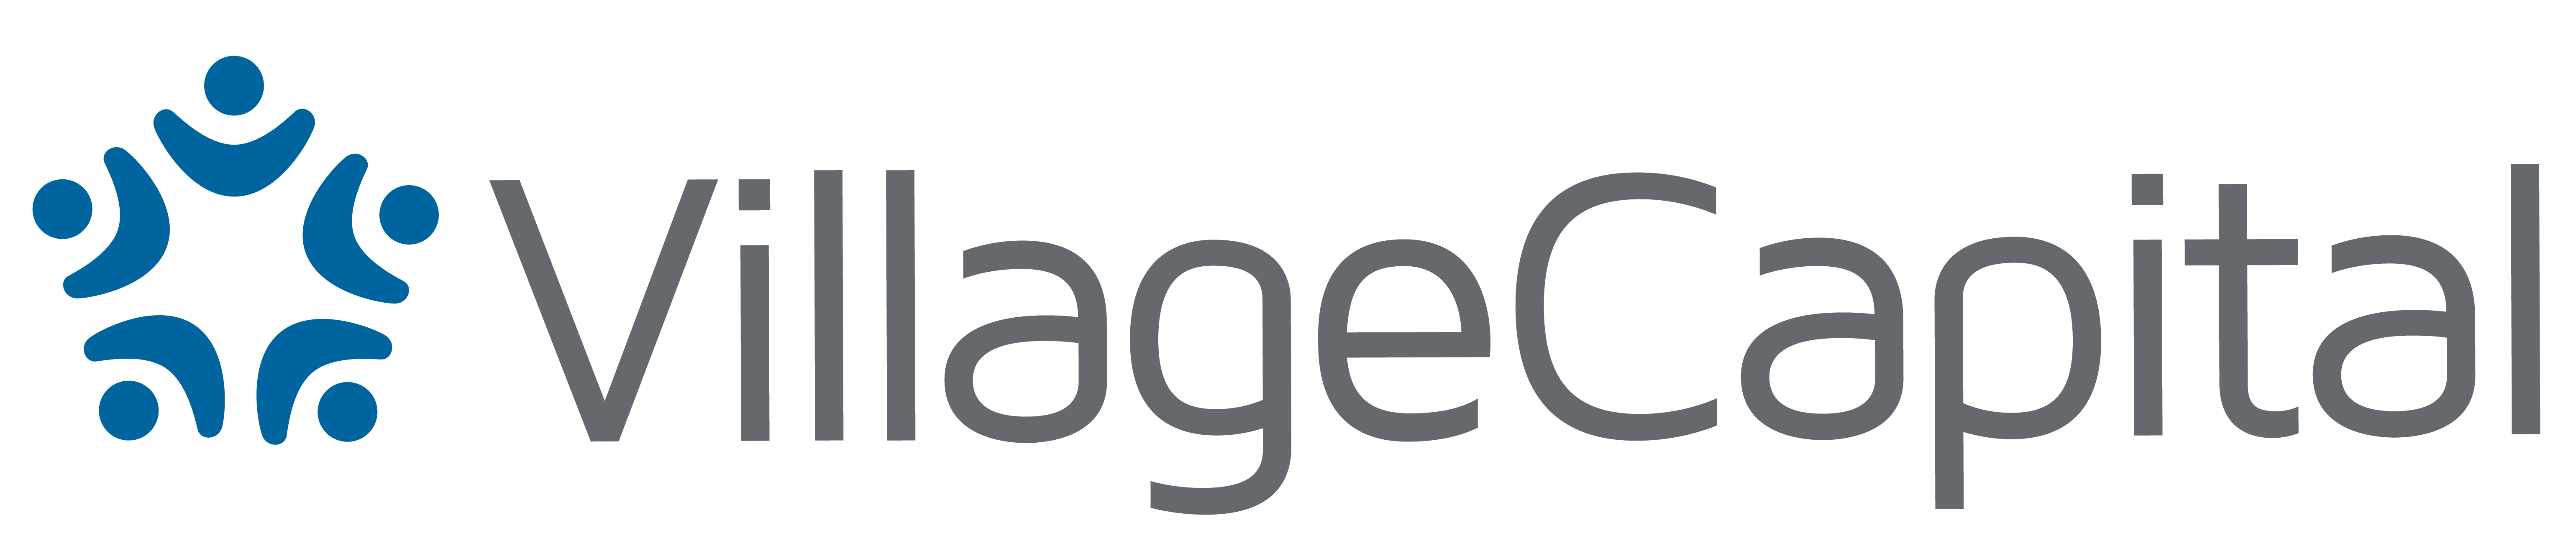 VillageCapital logo